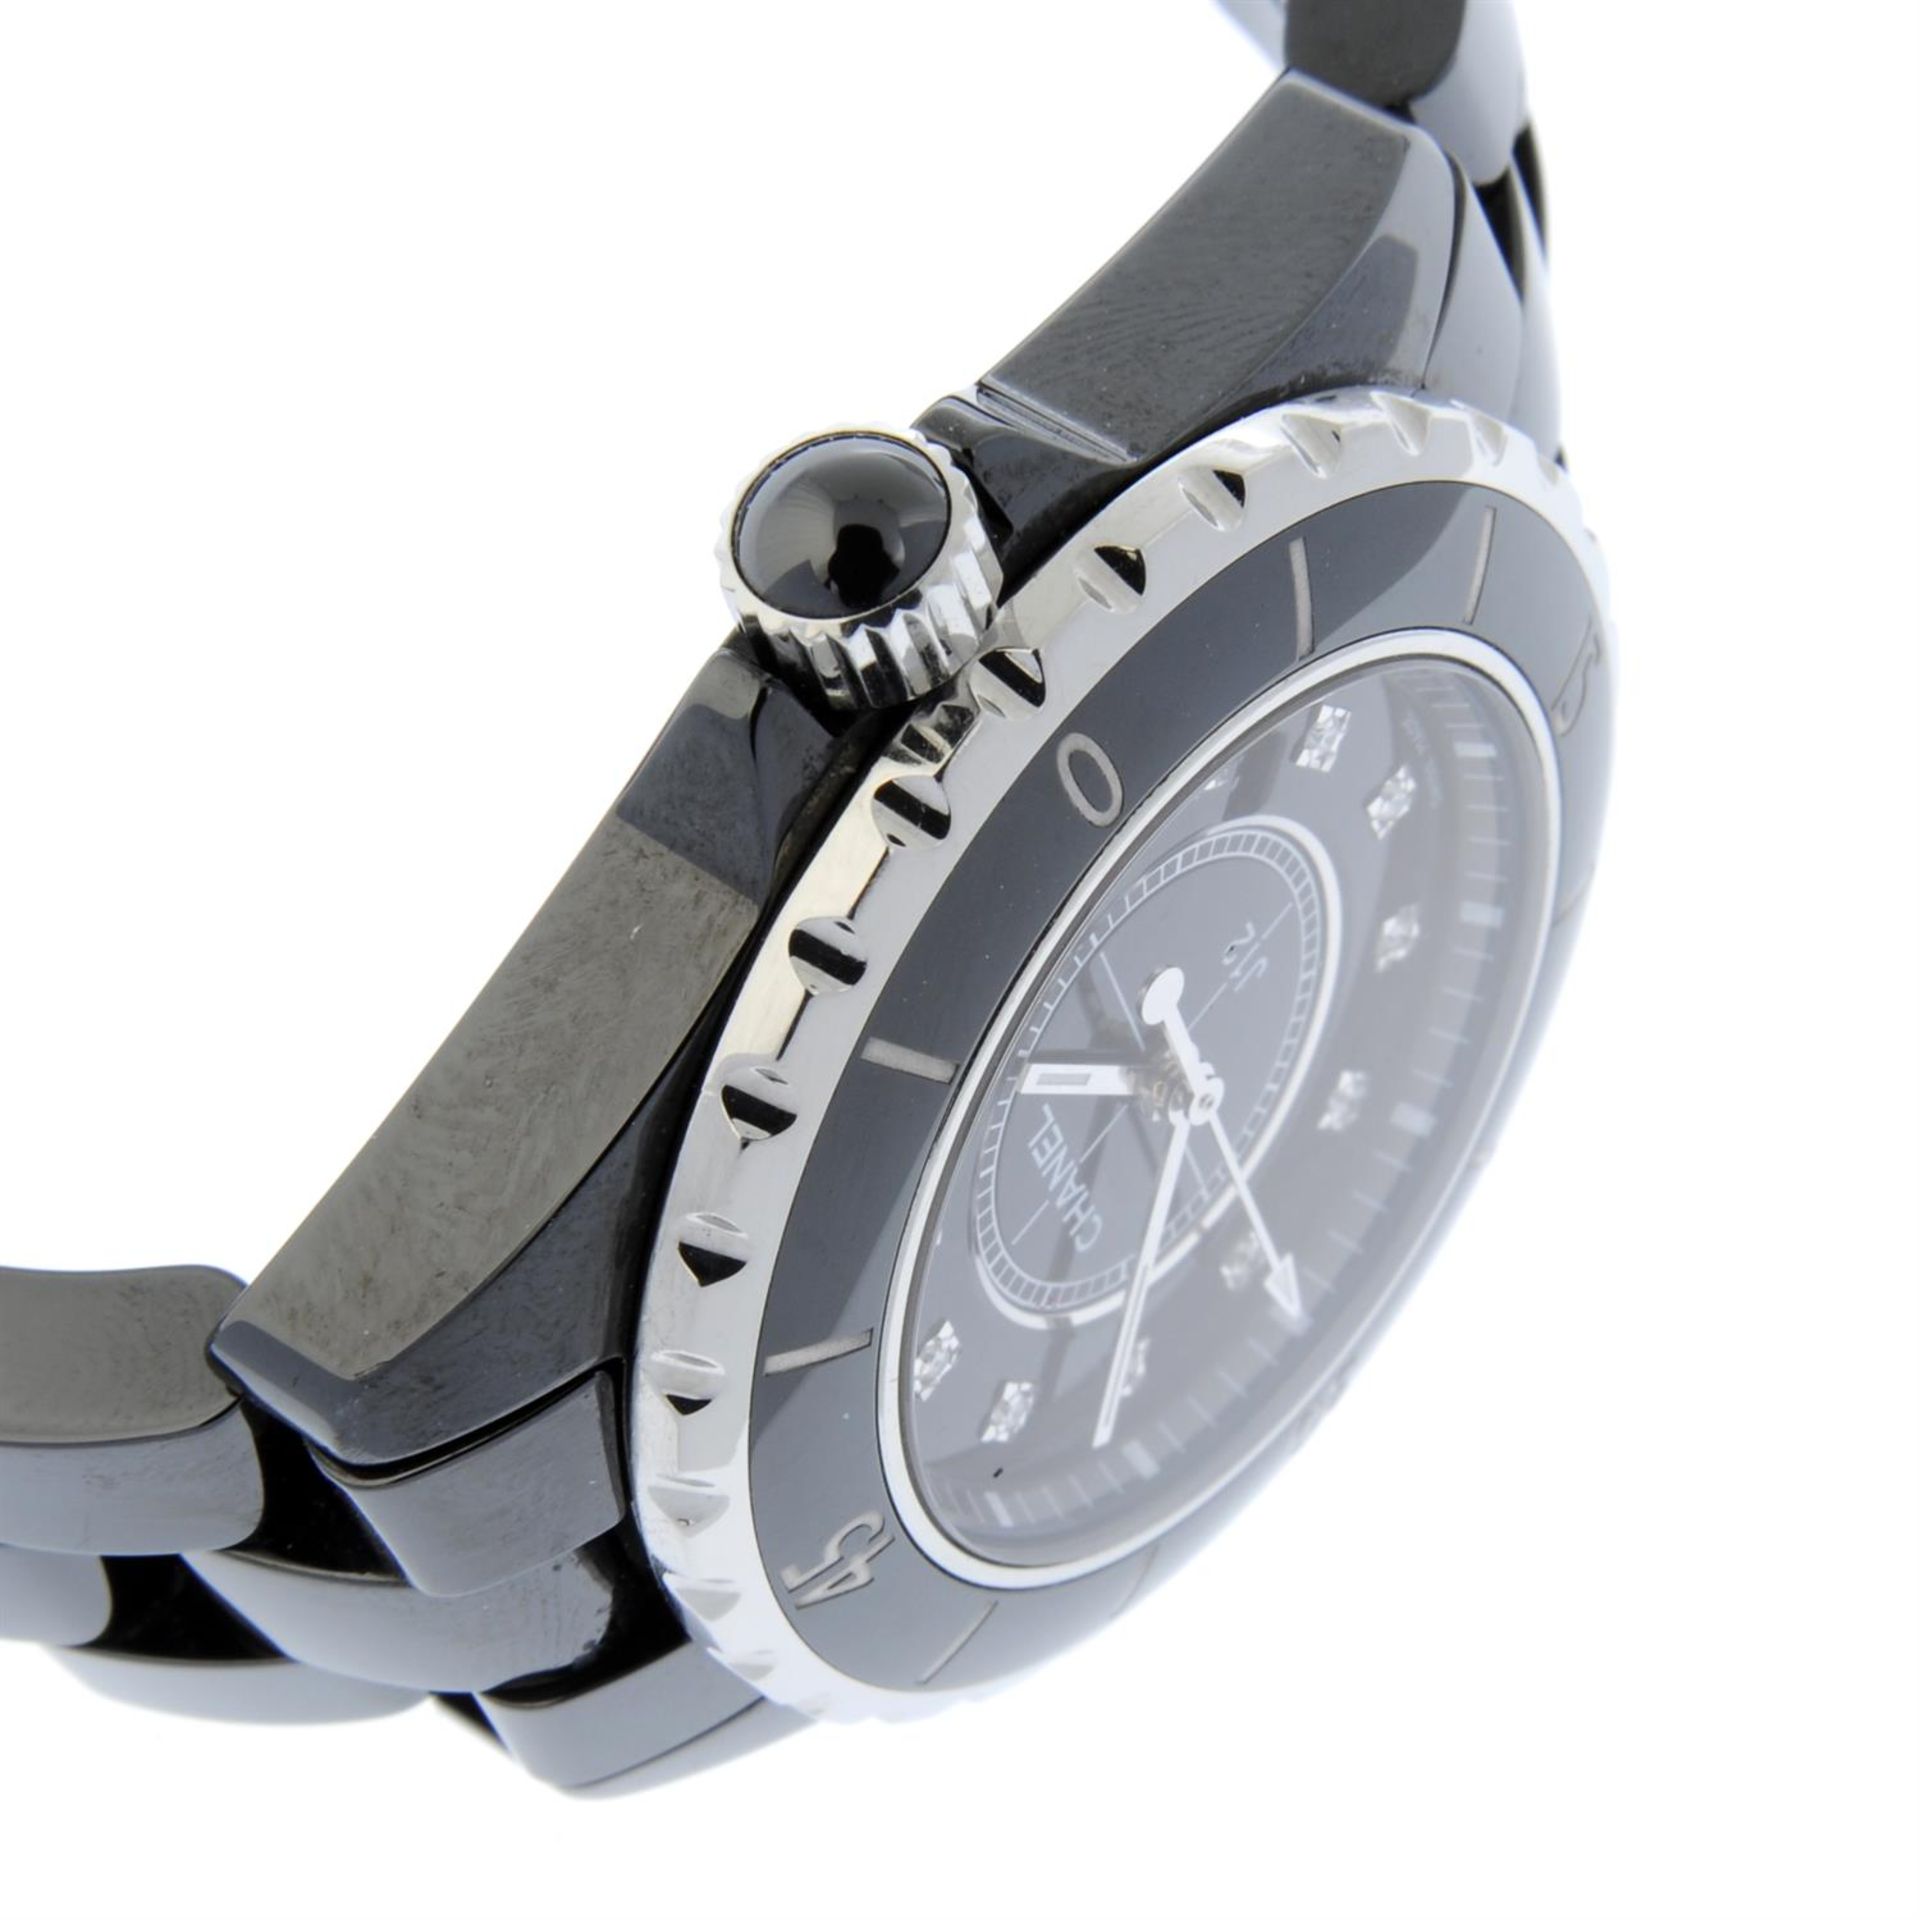 CHANEL - a ceramic J12 bracelet watch, 34mm. - Image 3 of 5